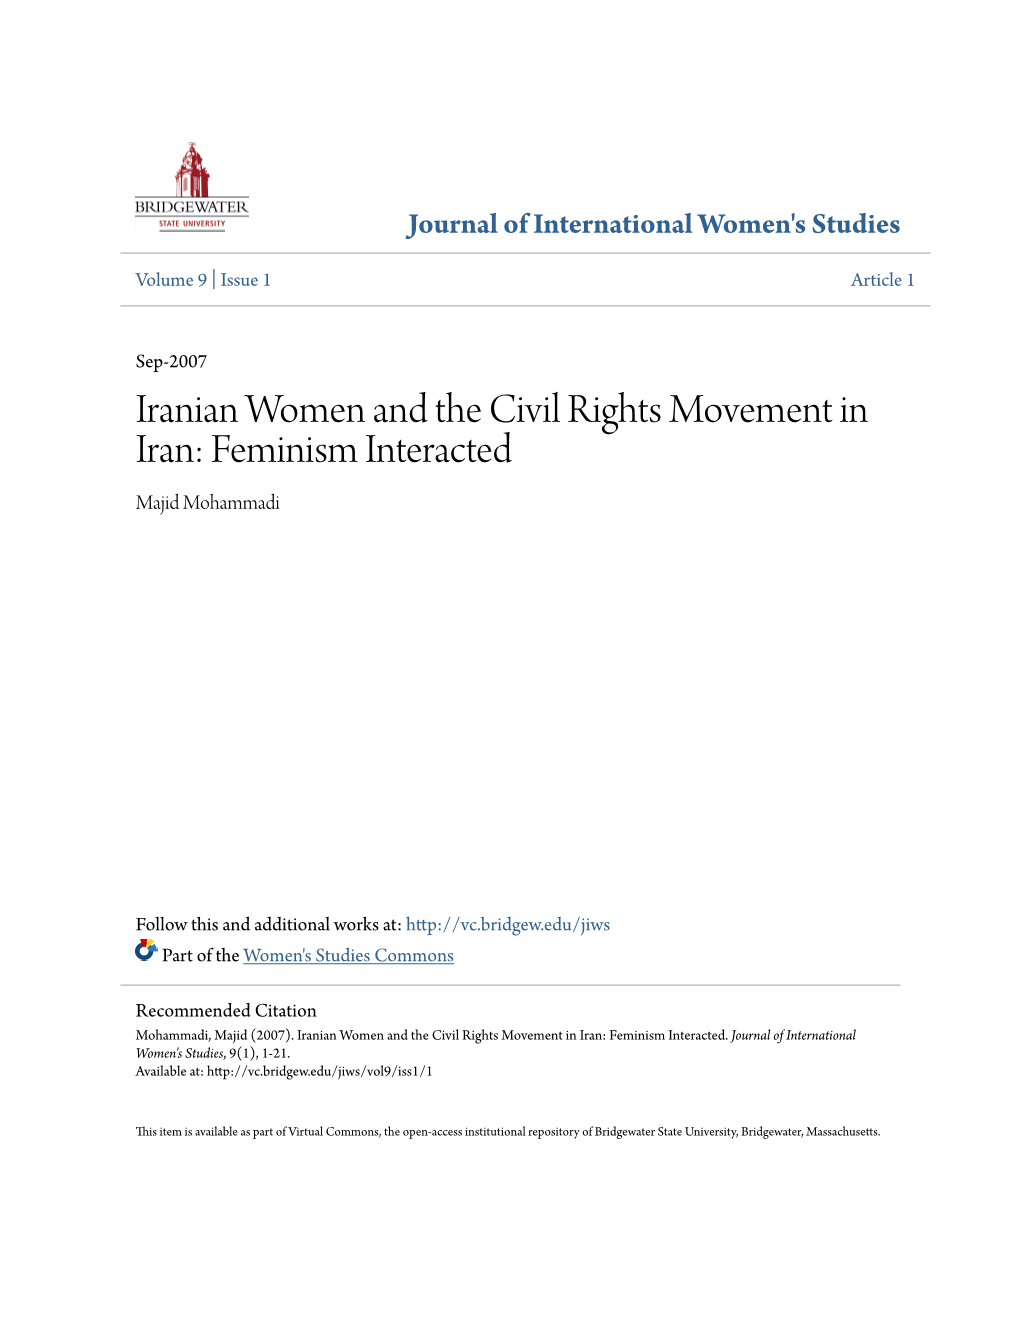 Iranian Women and the Civil Rights Movement in Iran: Feminism Interacted Majid Mohammadi